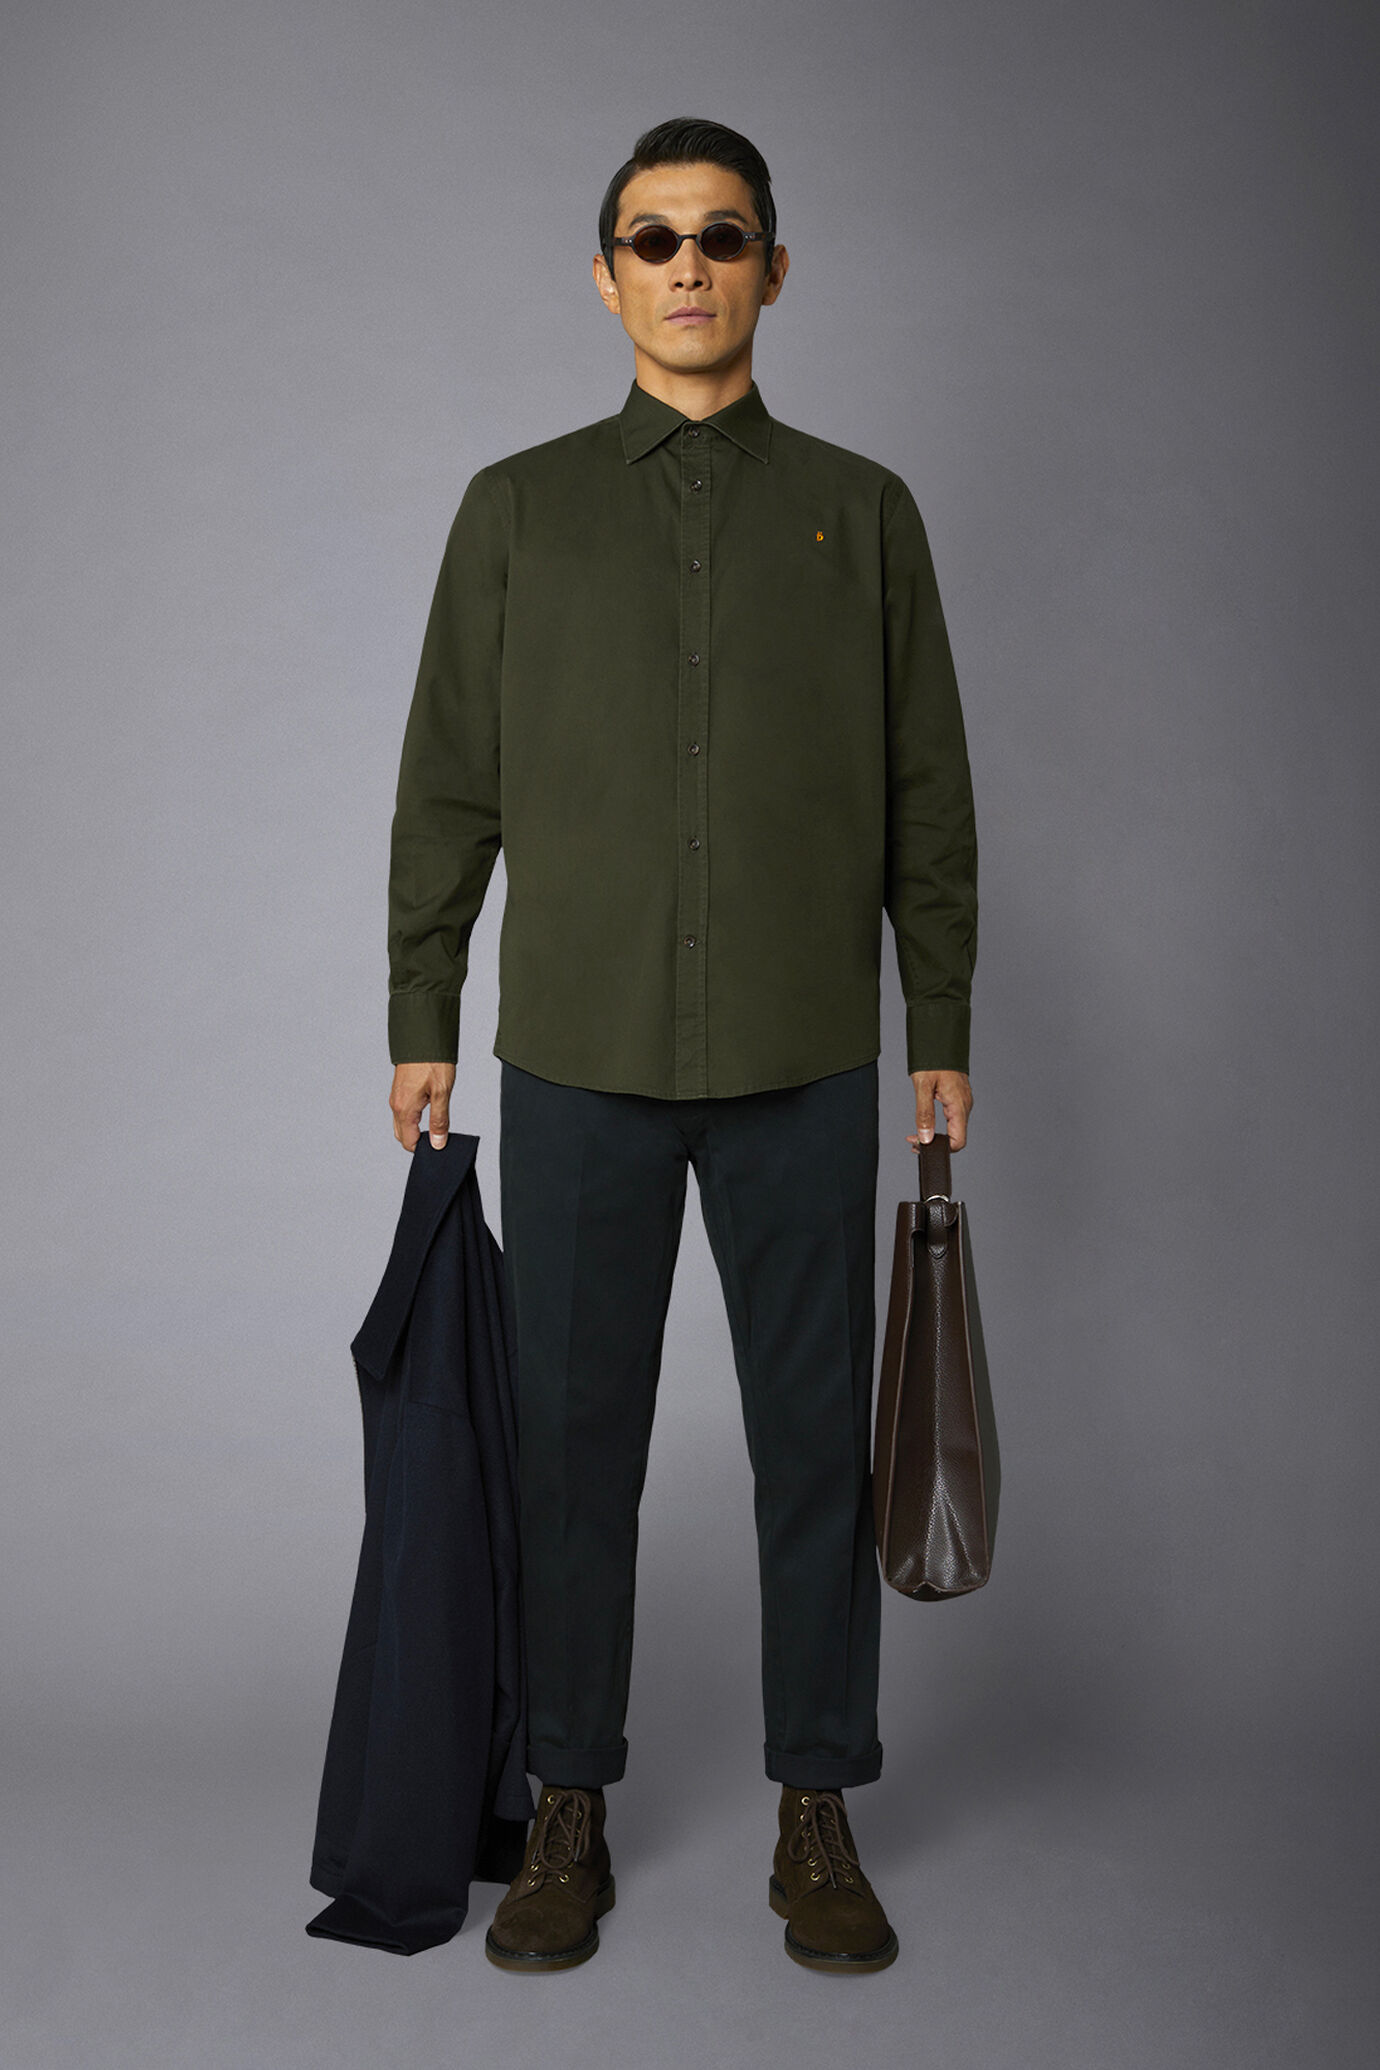 Men's casual French collar comfort fit shirt gabardine fabric